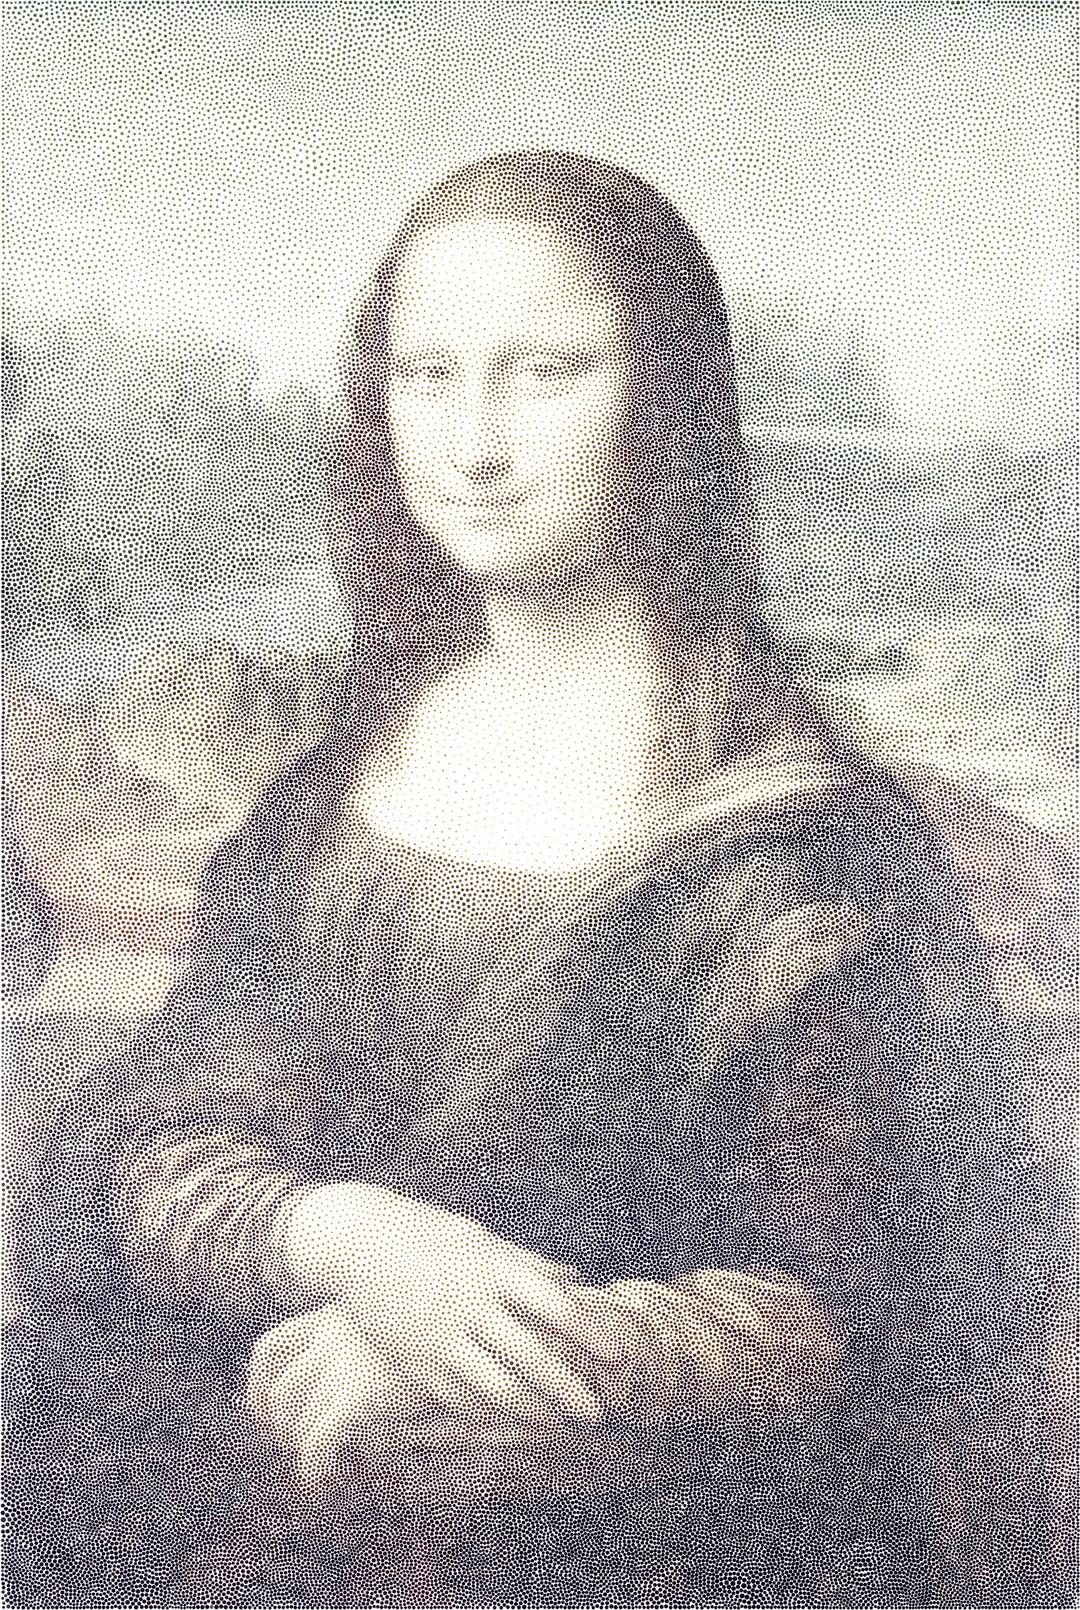 Mona Lisa Stippled png transparent